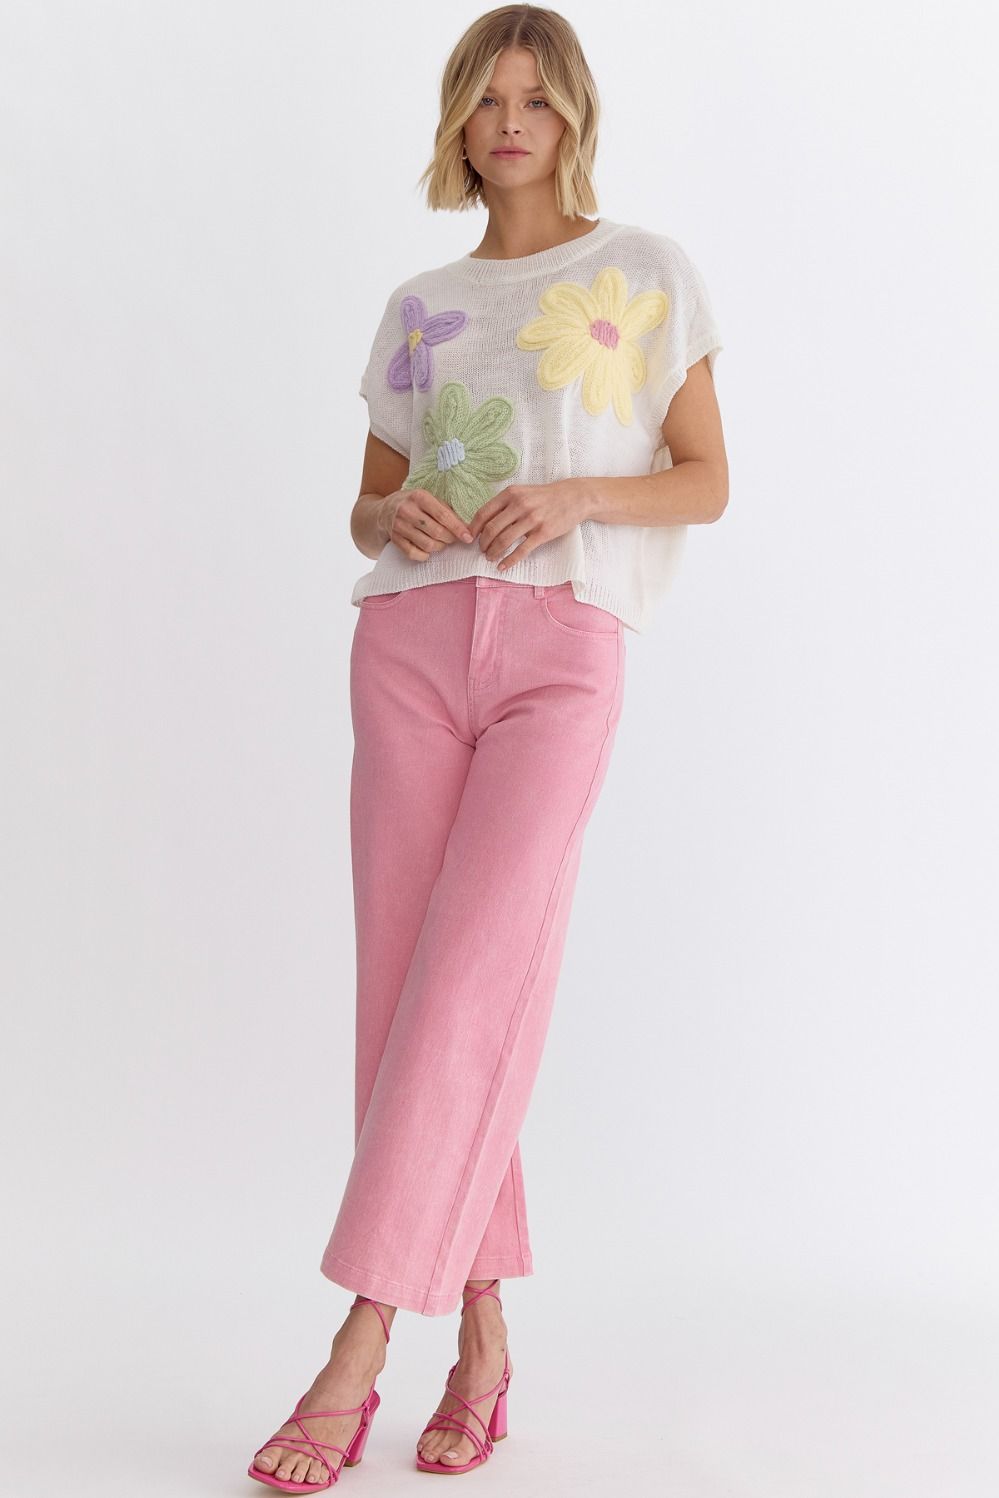 Entro | Floral Ivory Knit Top | Sweetest Stitch Online Boutique